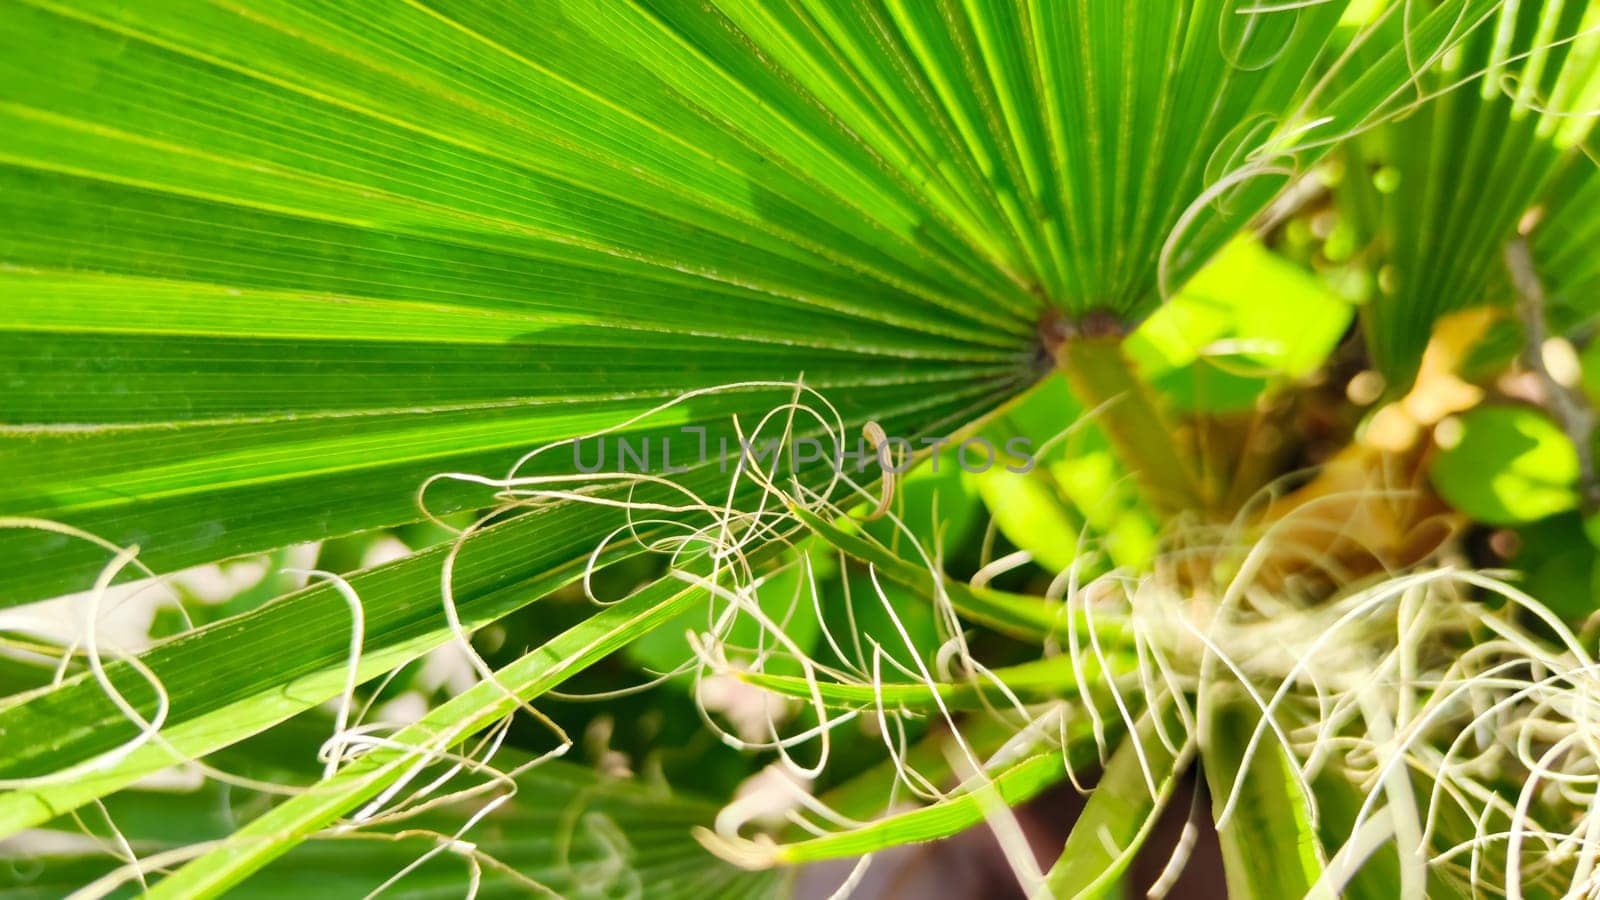 Green tropical palm leaf by Laguna781